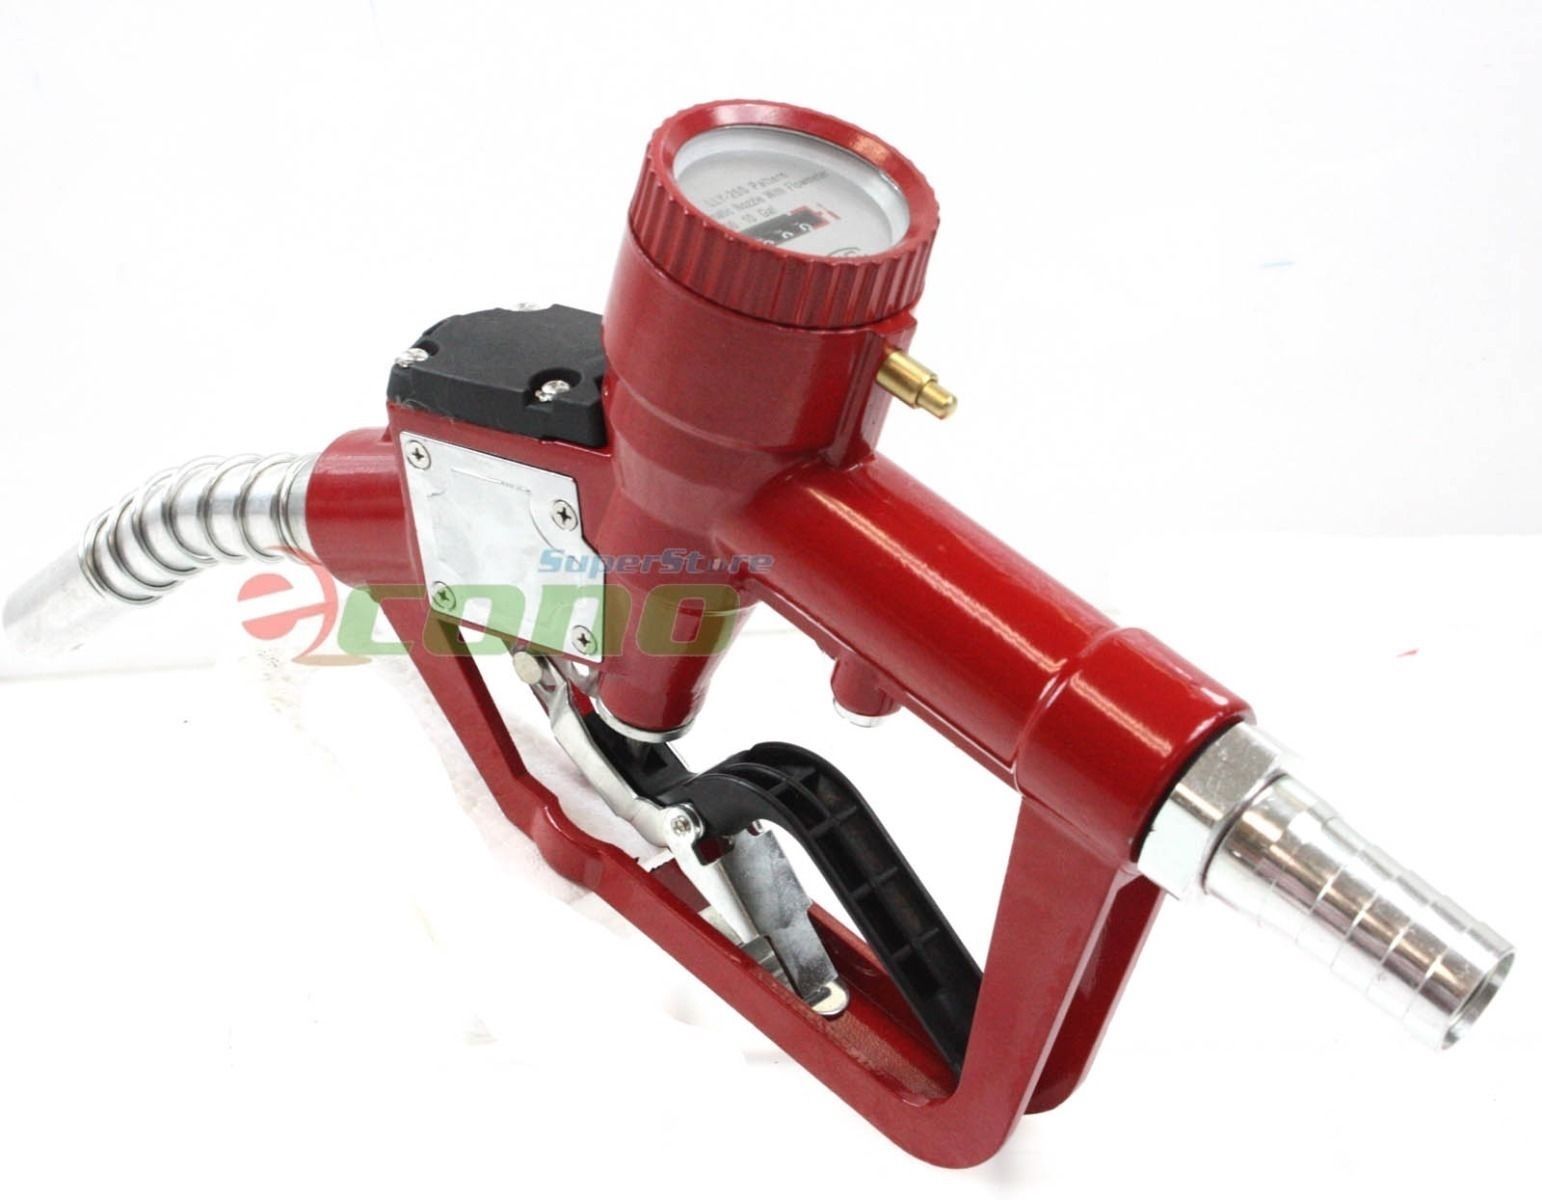 1" Oil Delivery Gun Nozzle Dispenser for Fuel Gasoline Diesel with Flow Meter 